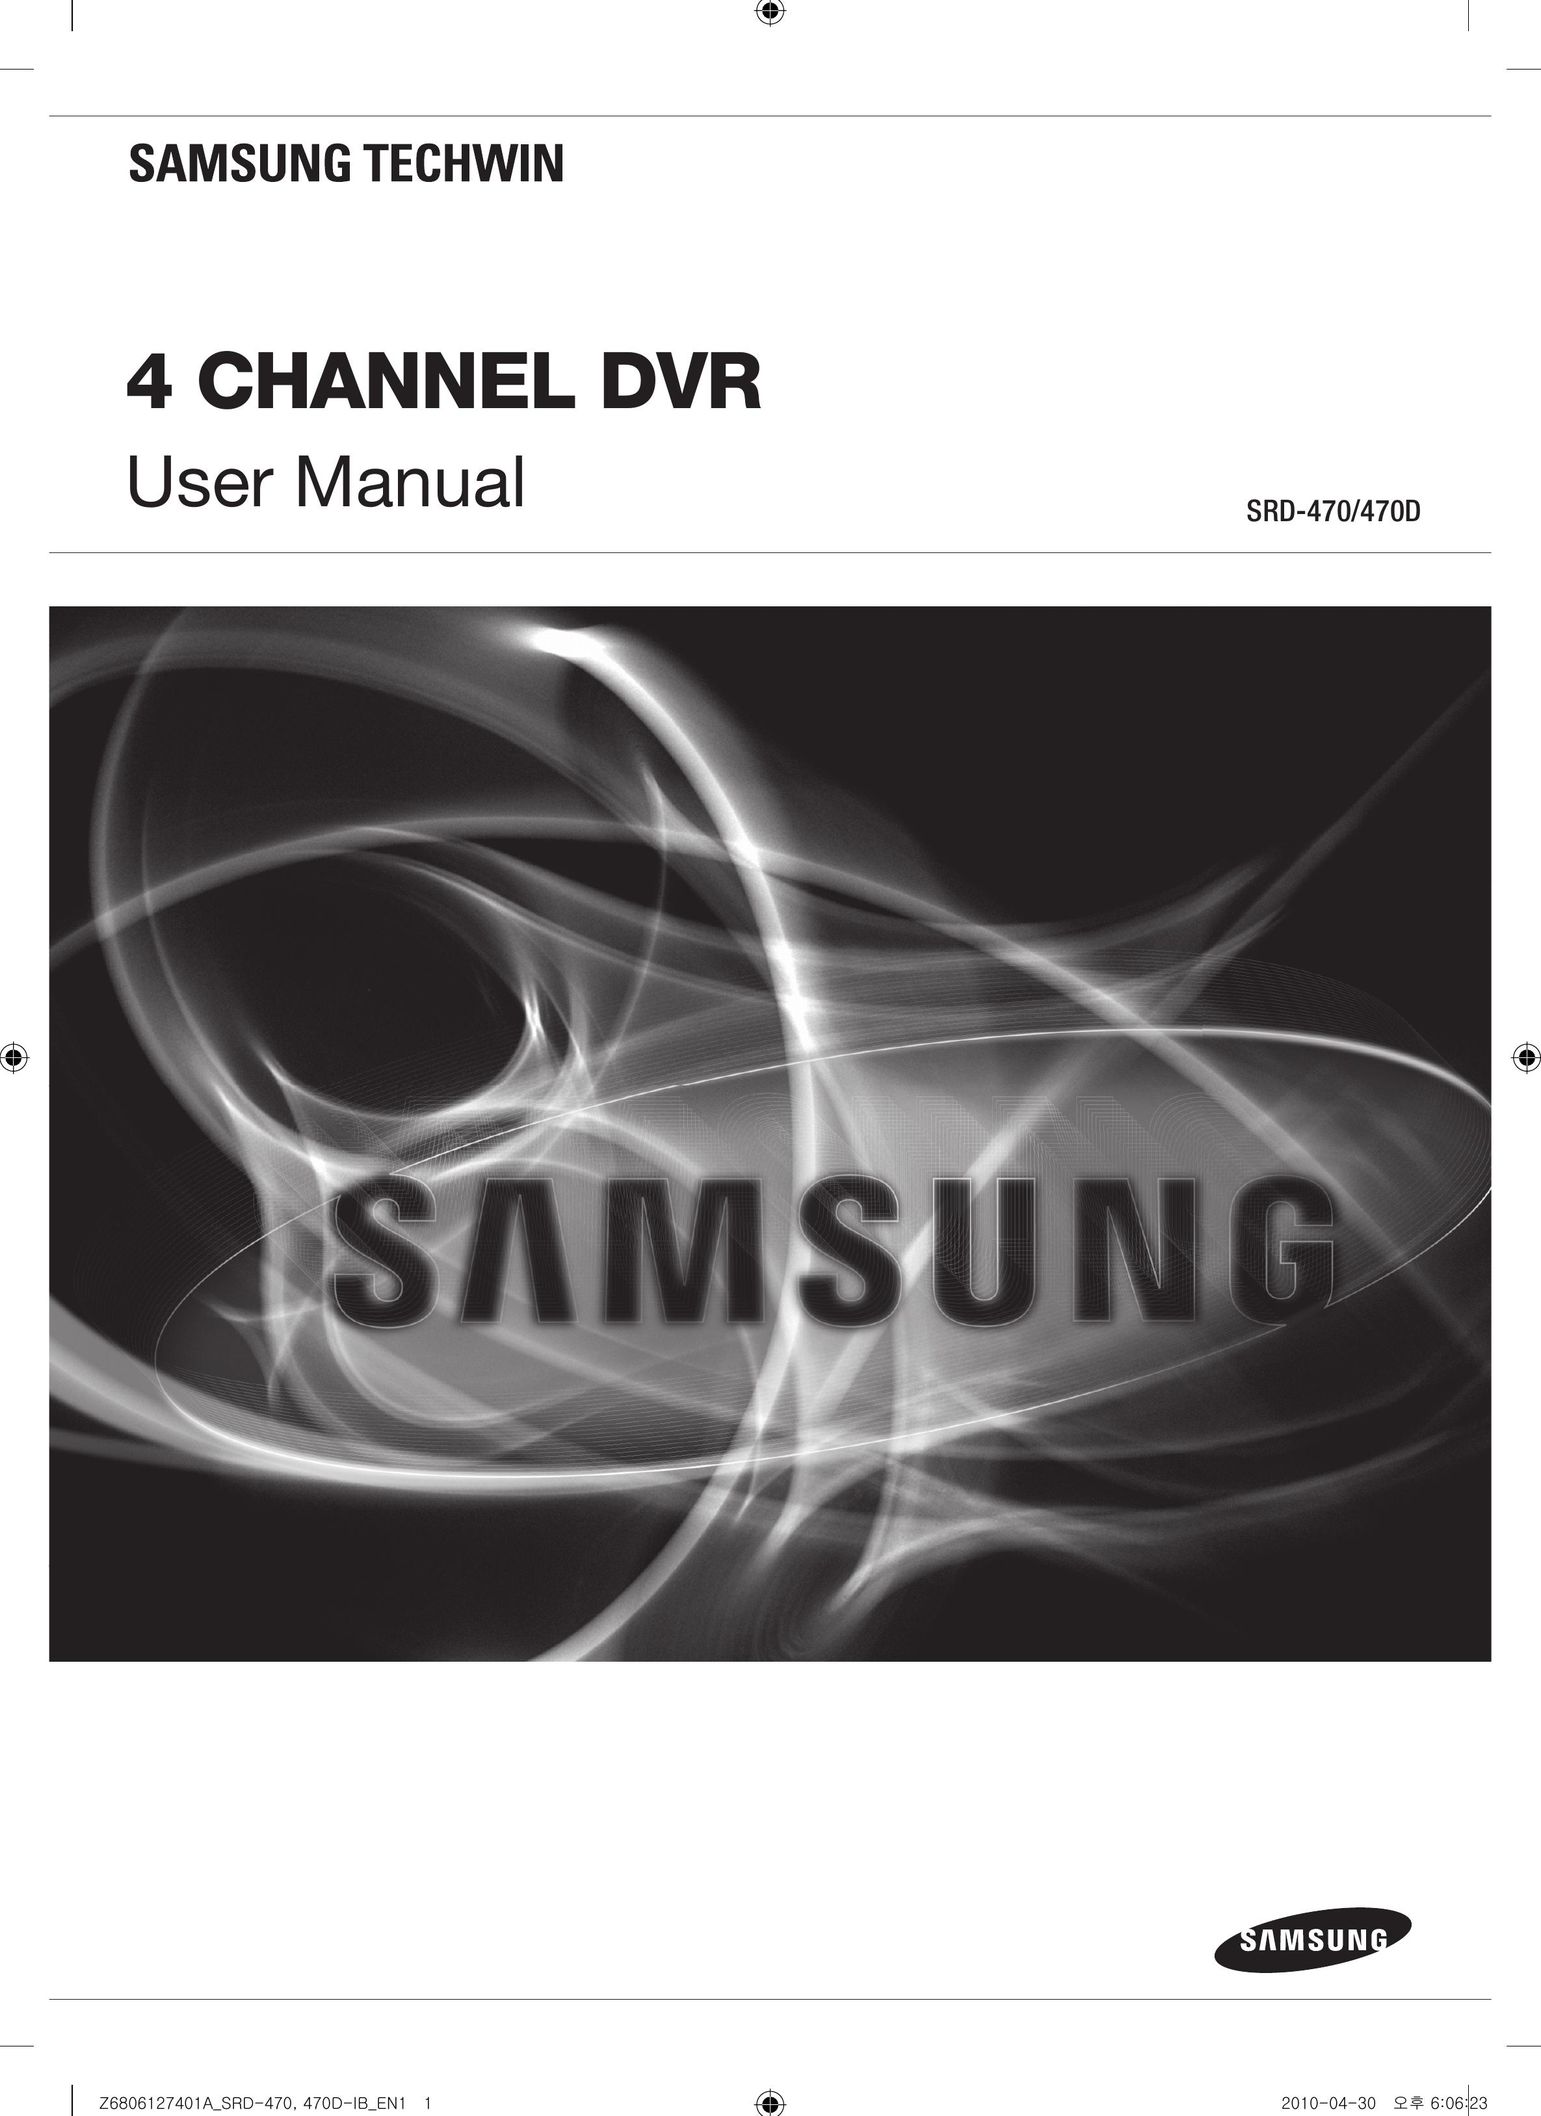 Samsung SRD-470 Cable Box User Manual